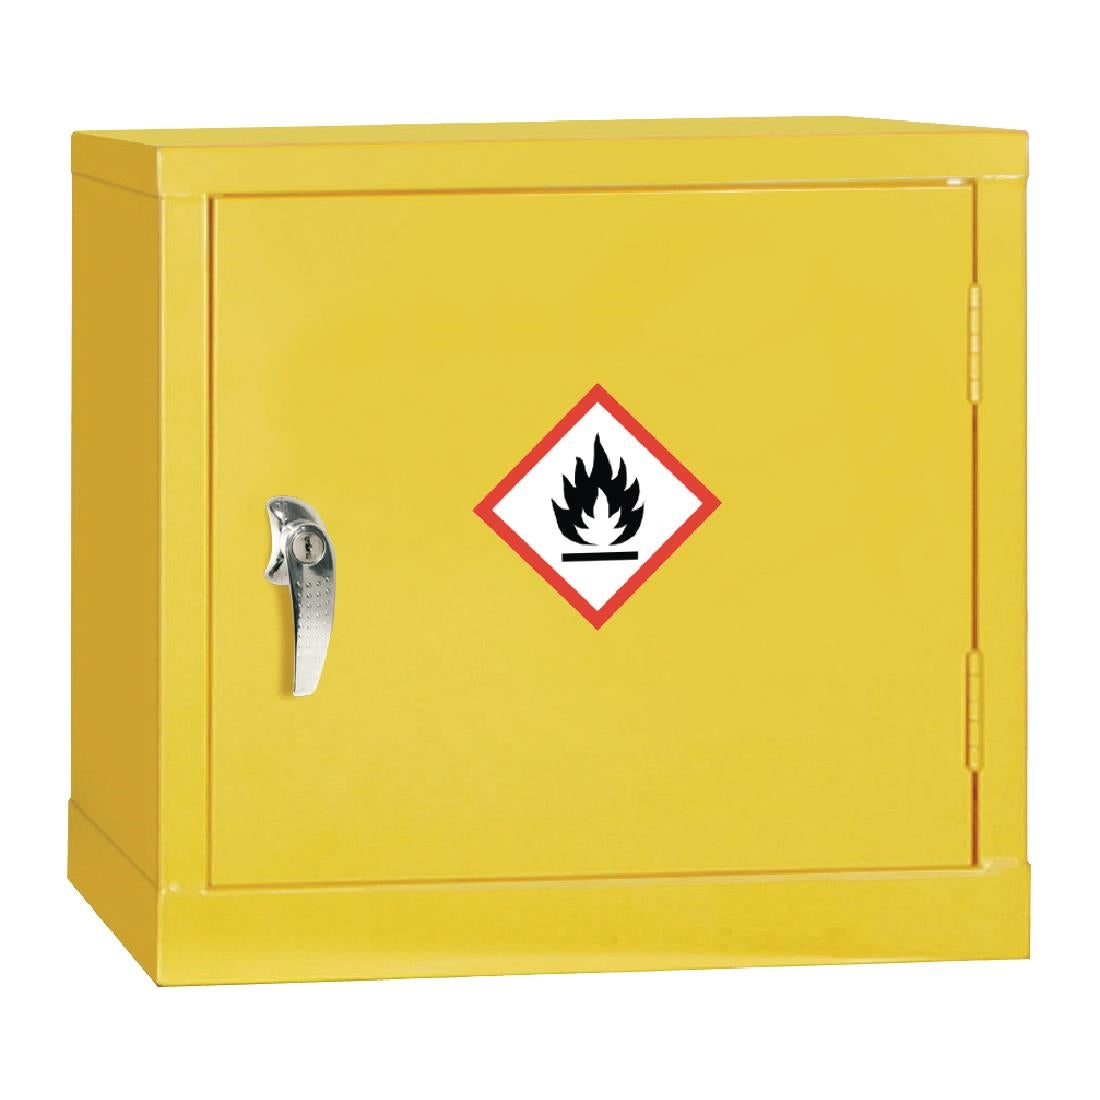 CD999 Hazardous Substance Cabinet Single Door Yellow 5Ltr JD Catering Equipment Solutions Ltd